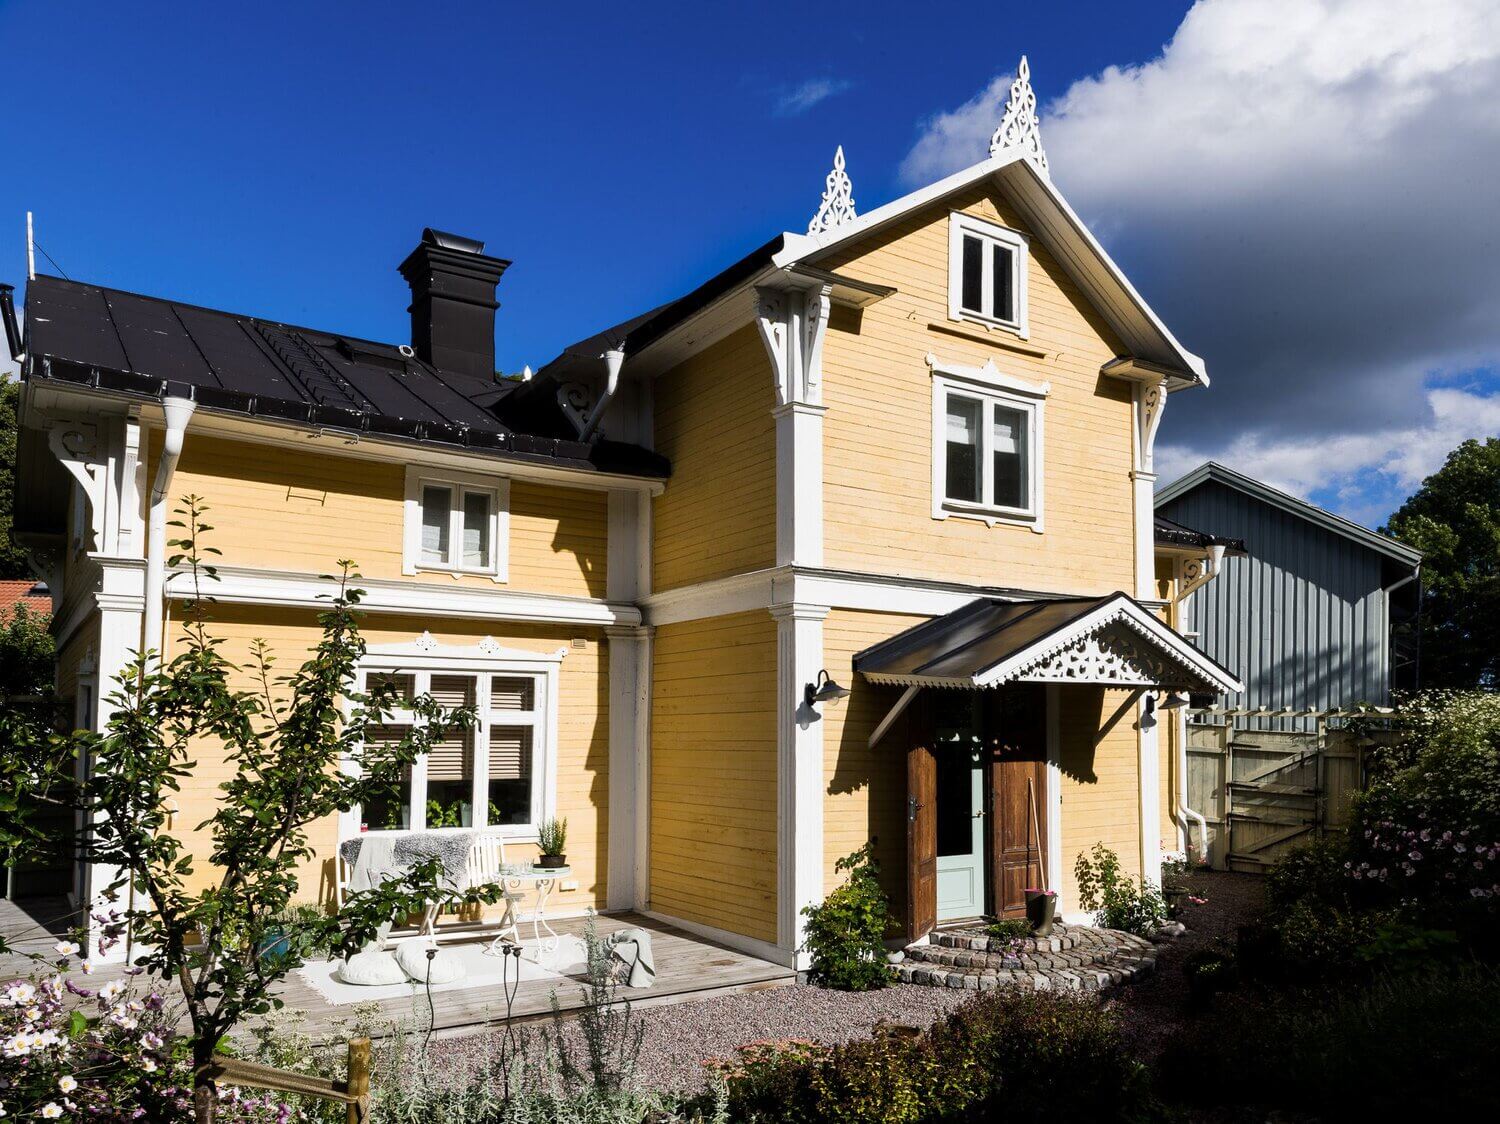 ALightSwedishVillaWithHistoricCharm TheNordroom33 A Light Swedish Villa With Historic Charm